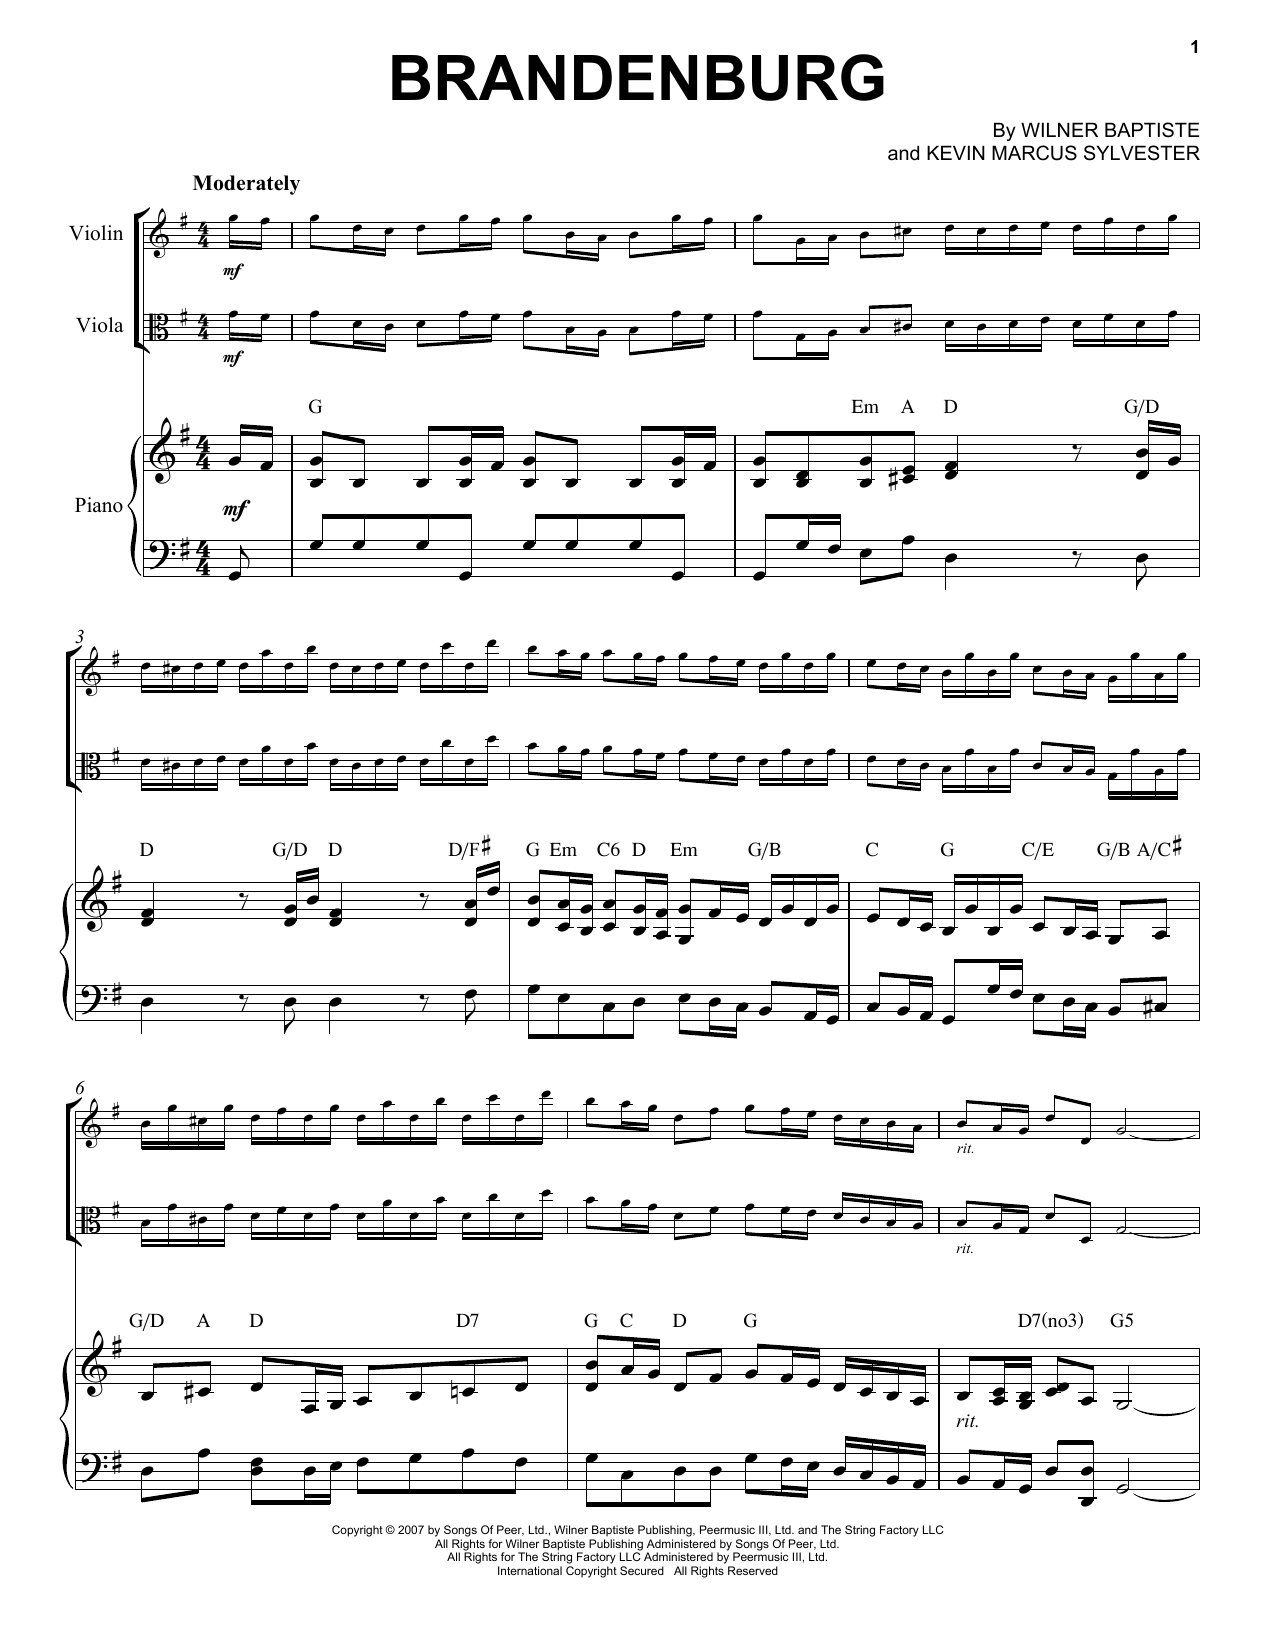 Black Violin Brandenburg Sheet Music Notes & Chords for Instrumental Duet and Piano - Download or Print PDF